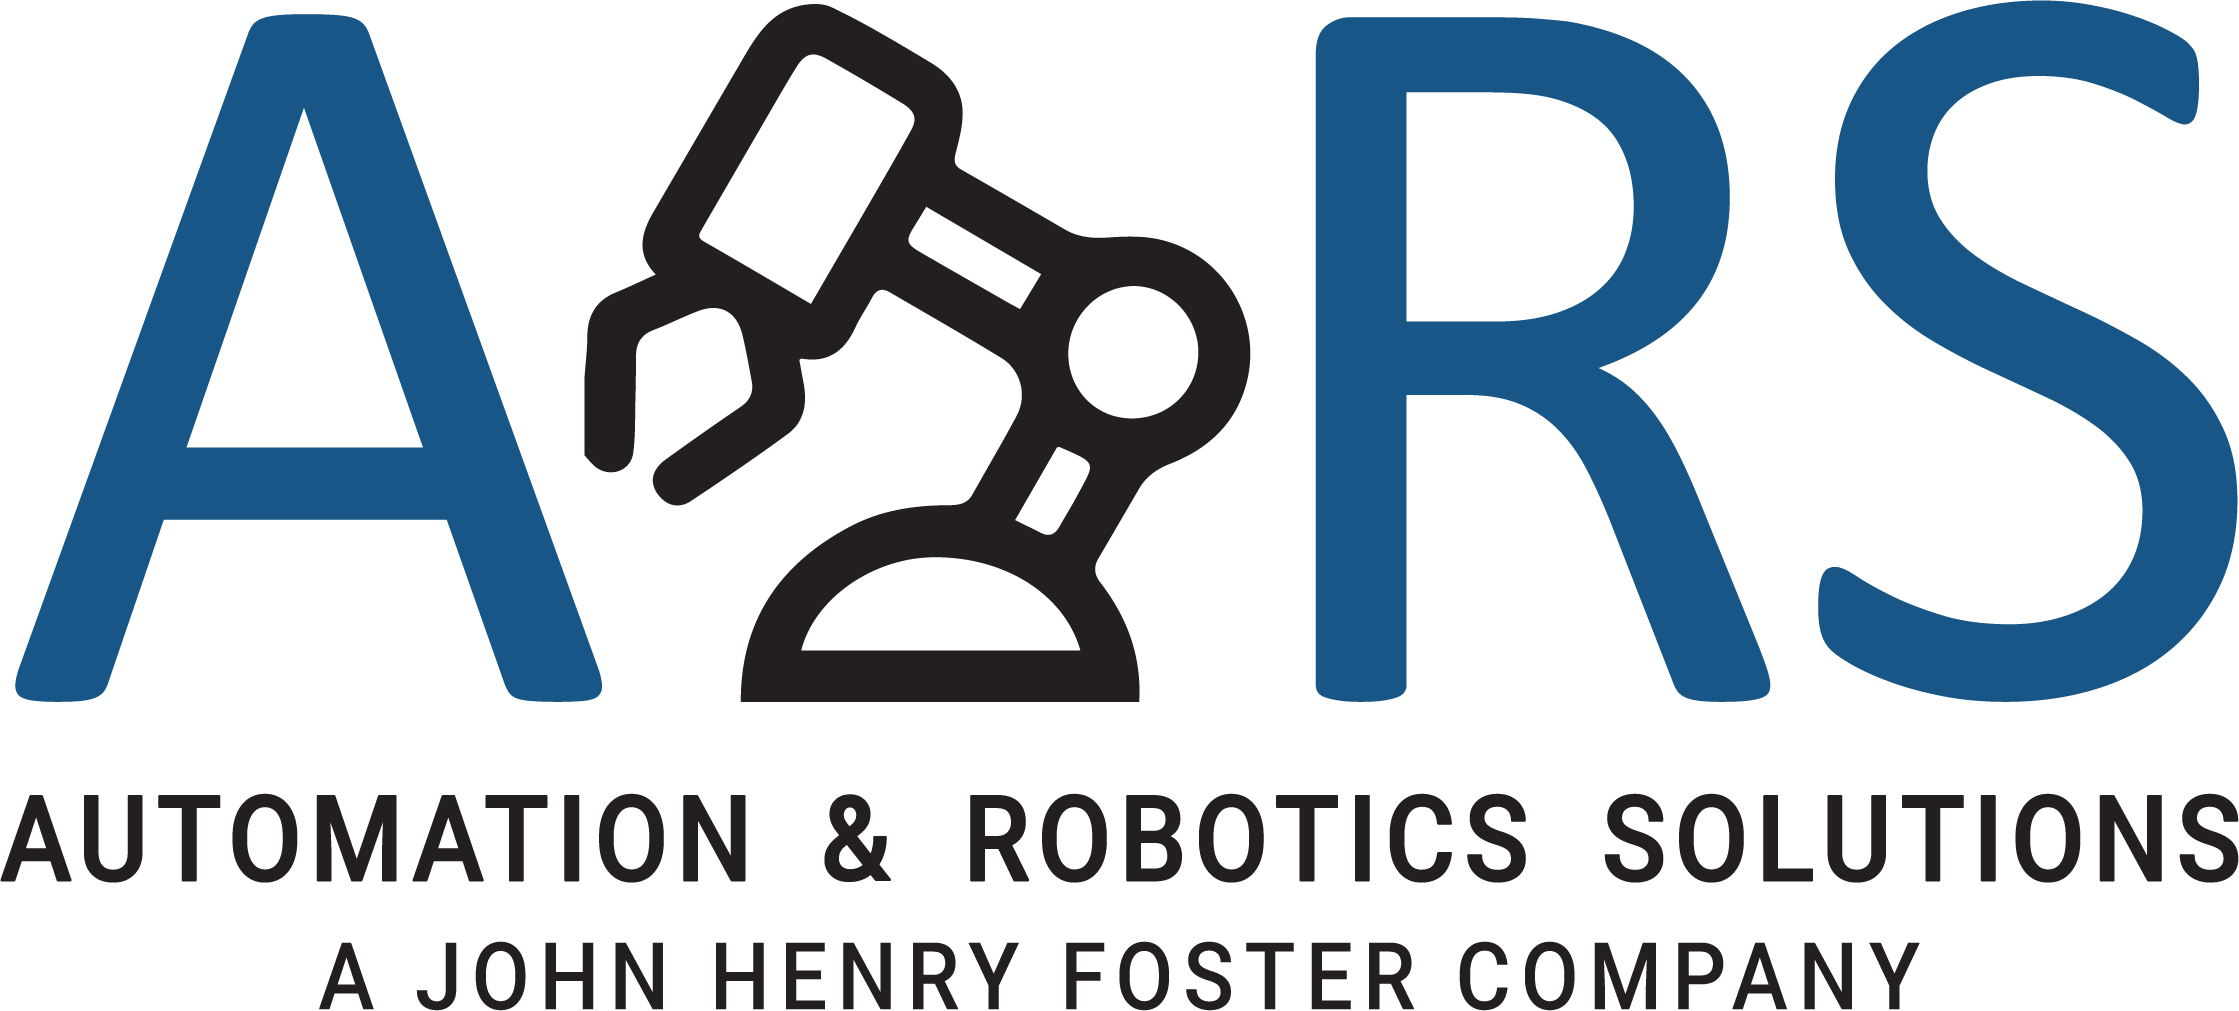 Automation & Robotics Solutions